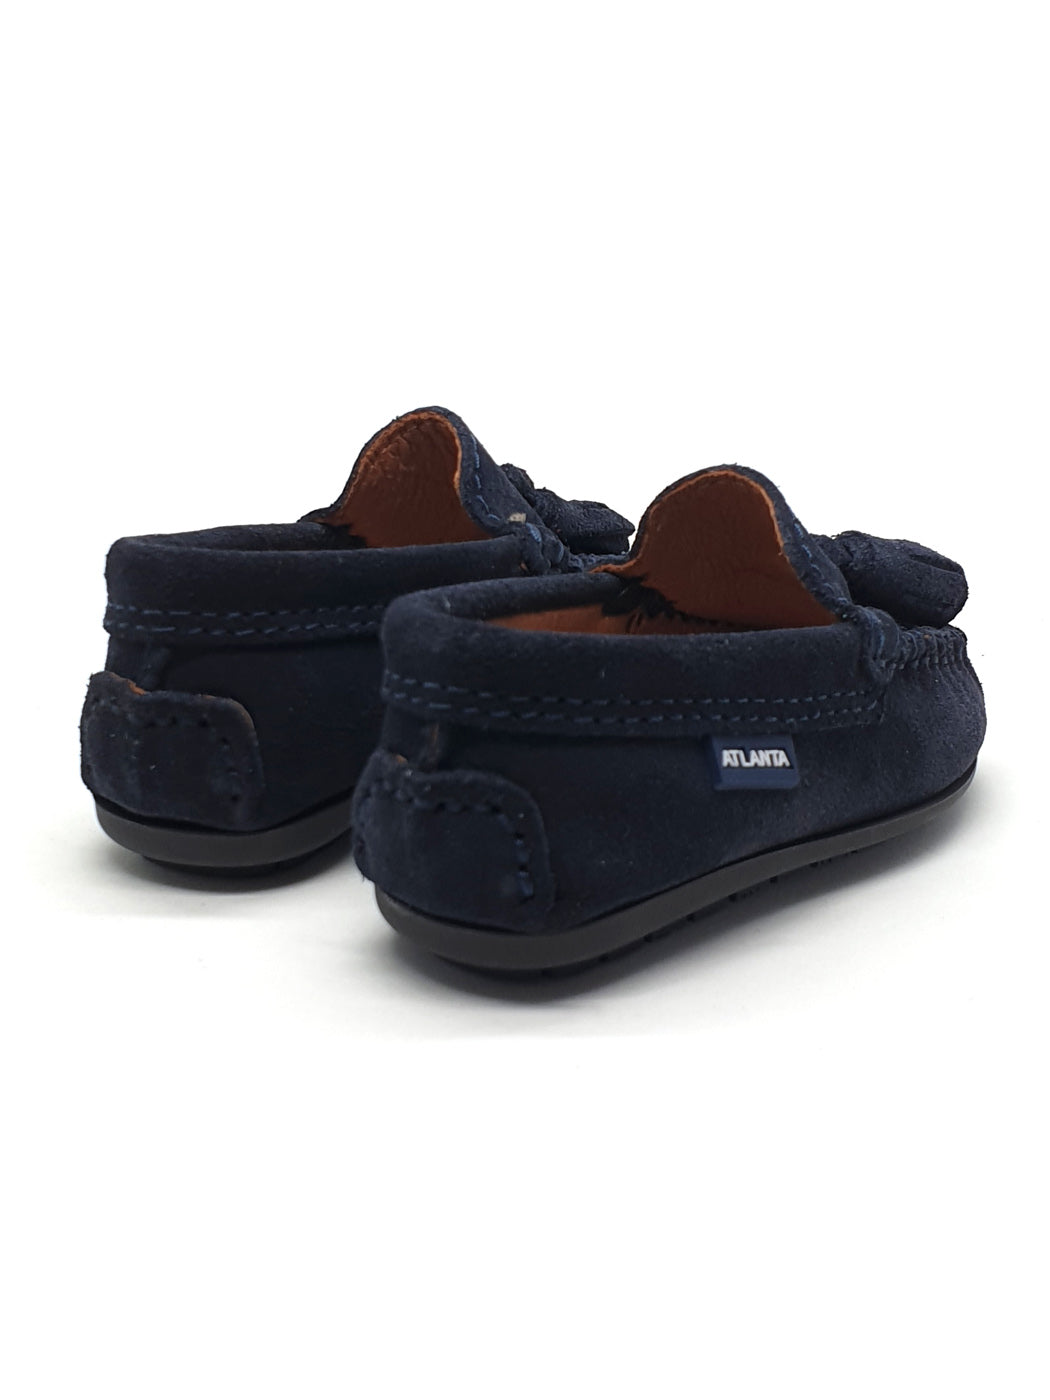 Atlanta Mocassin-Baby Shoes Moccasins Blue Dark-016G009